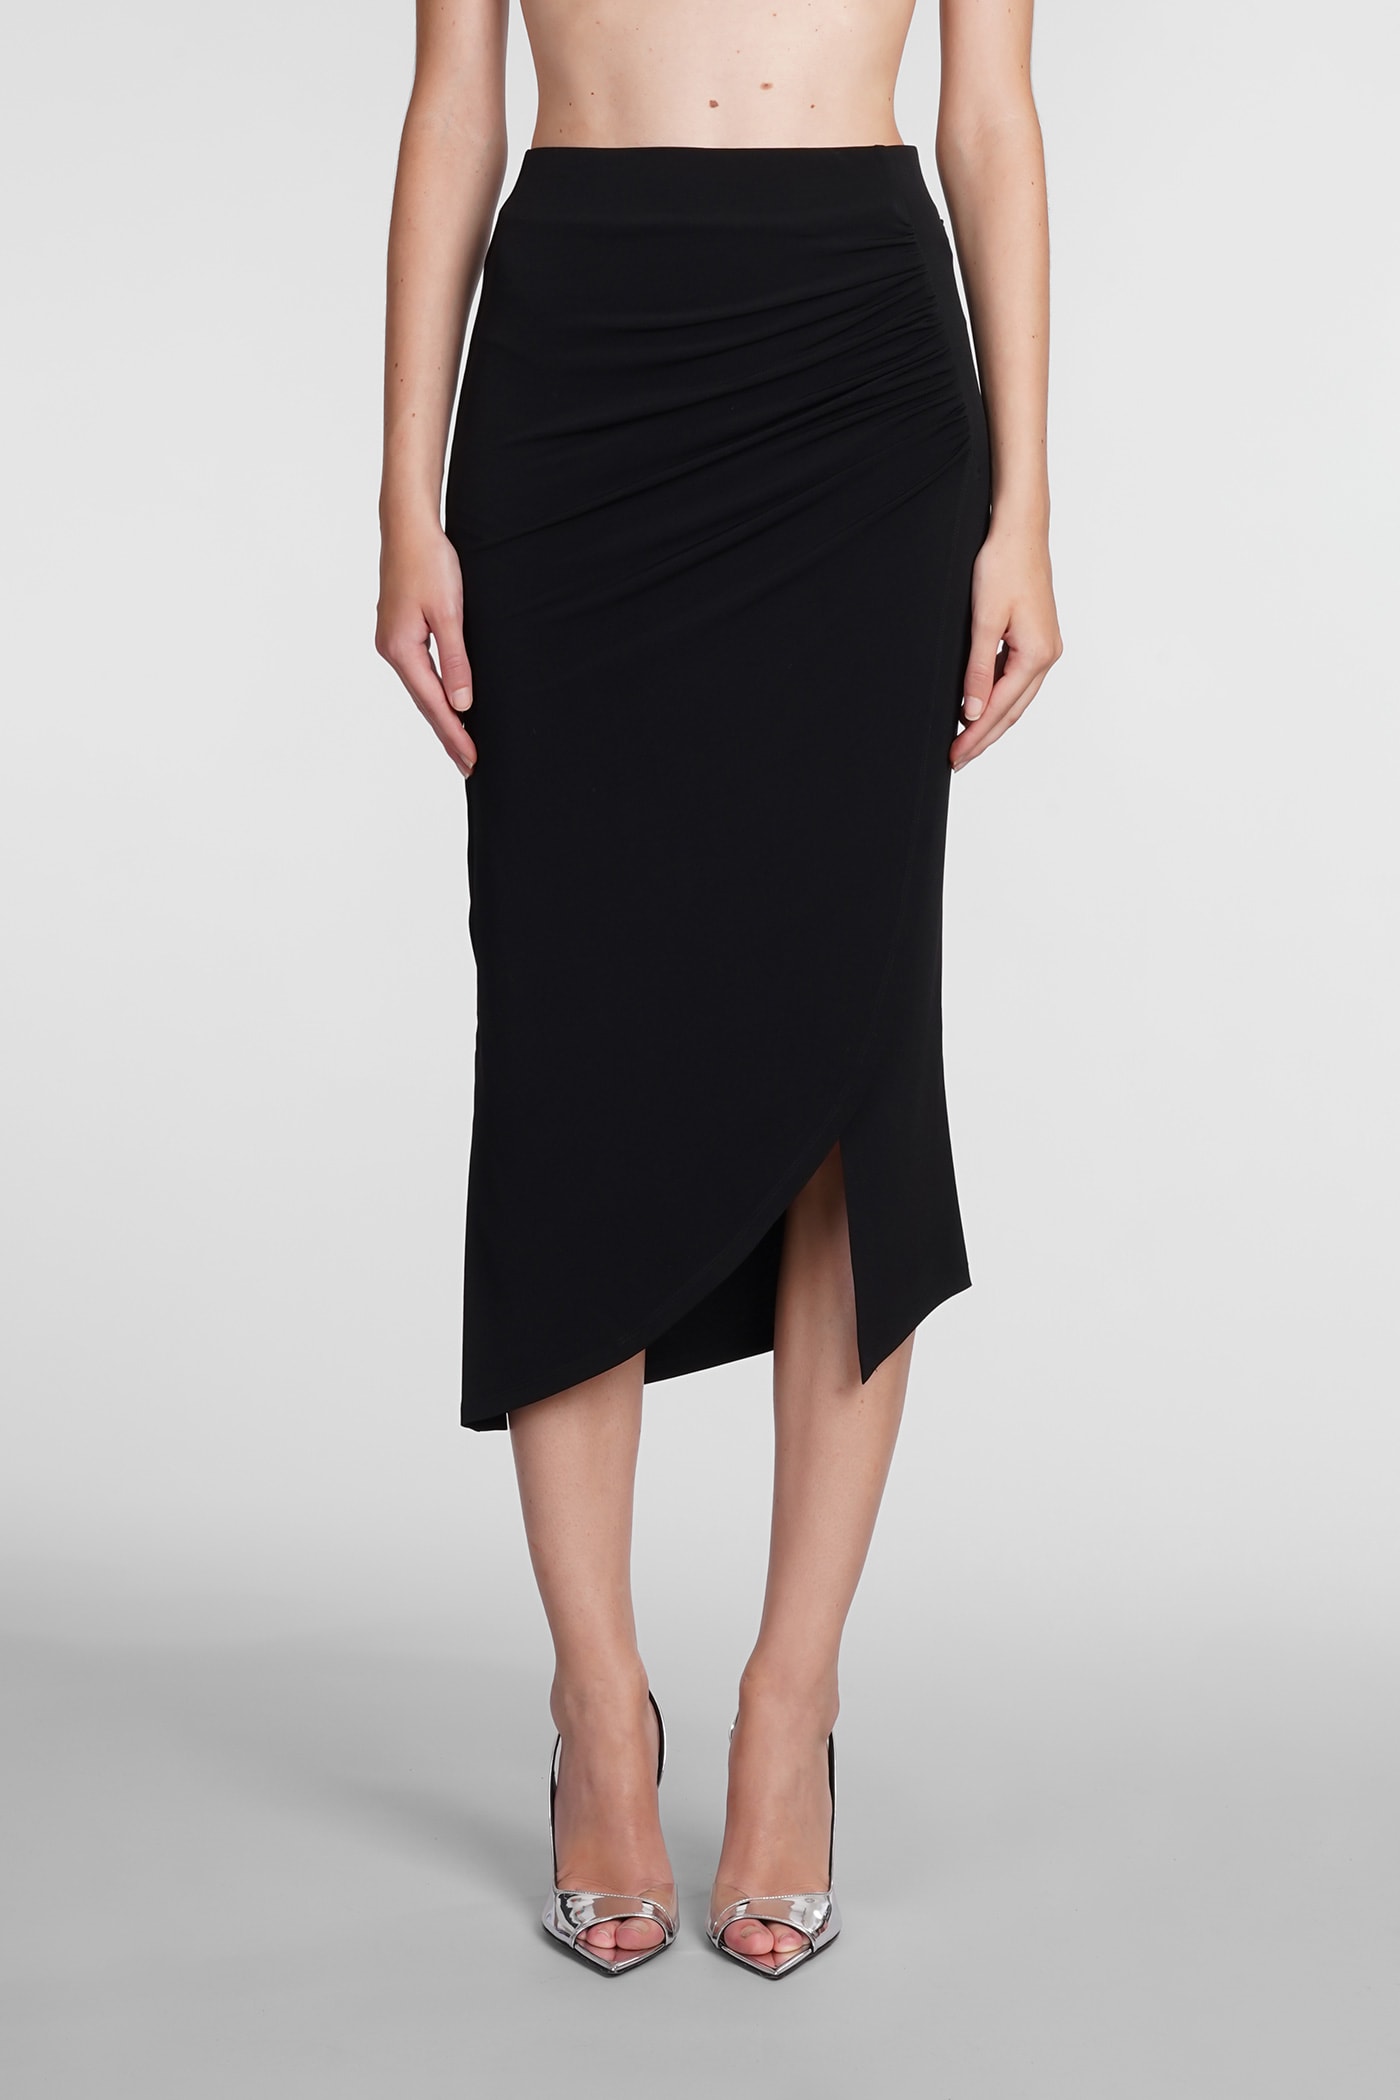 Hervé Léger Skirt In Black Polyester